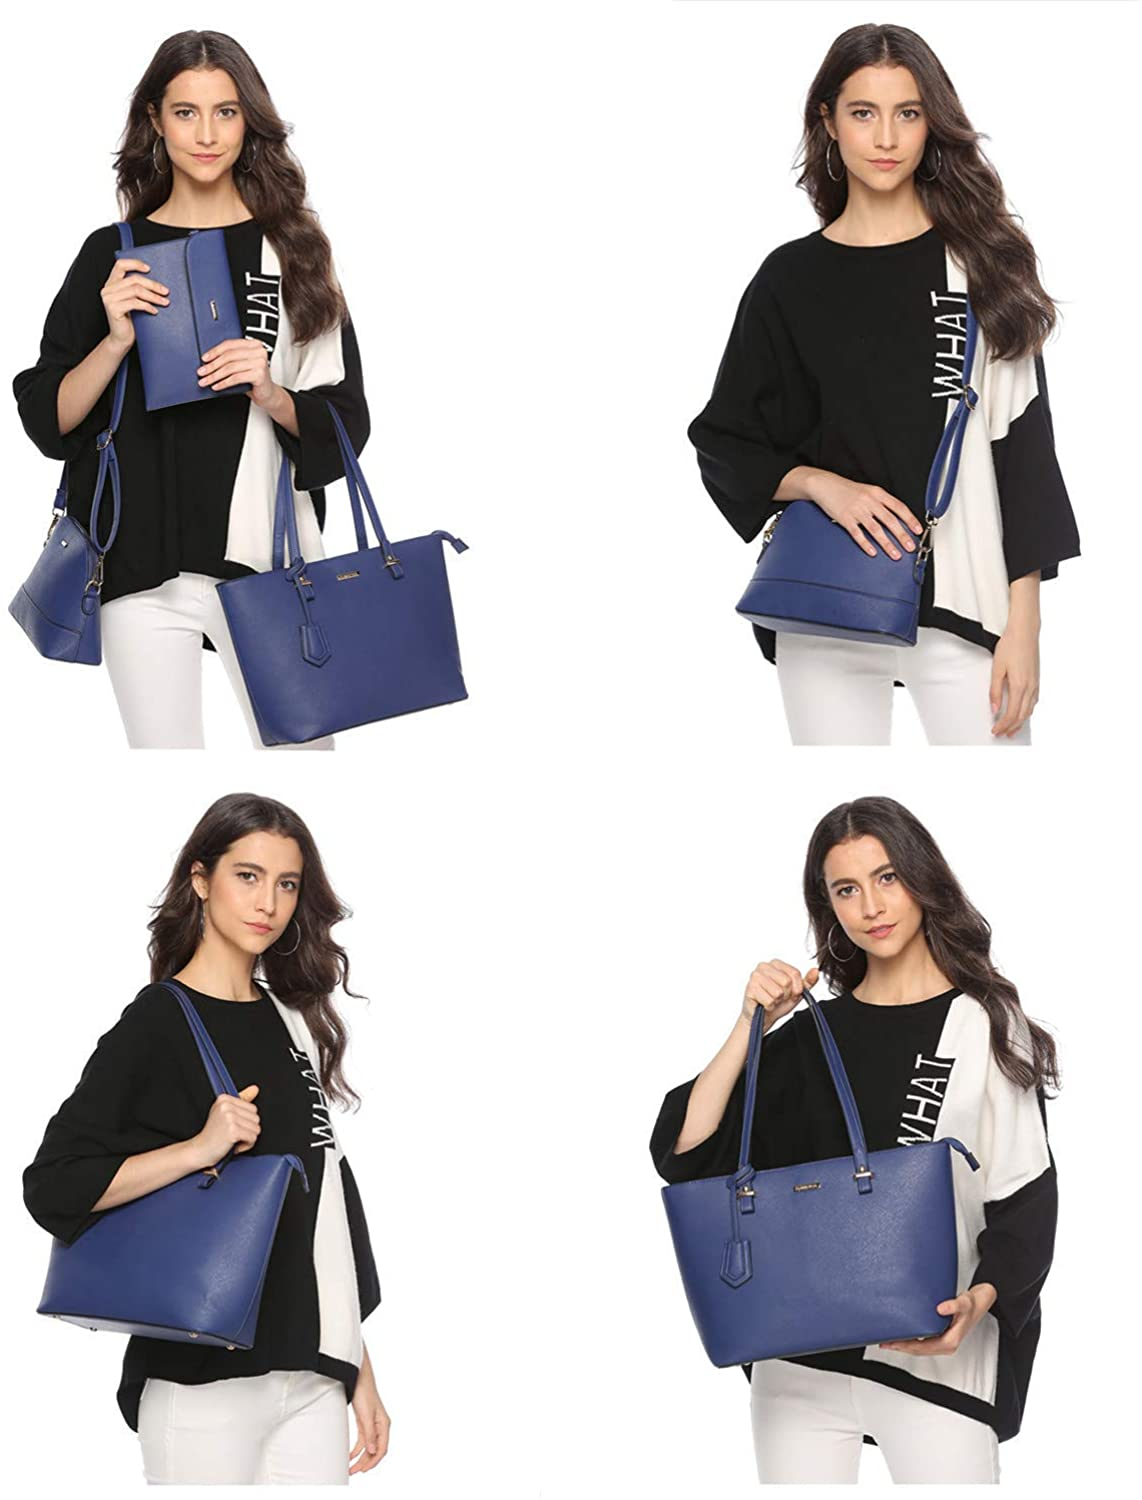 Tan Clutch|luxury 6-piece Crocodile Patent Leather Handbag Set For Women -  Versatile Shoulder & Crossbody Bags